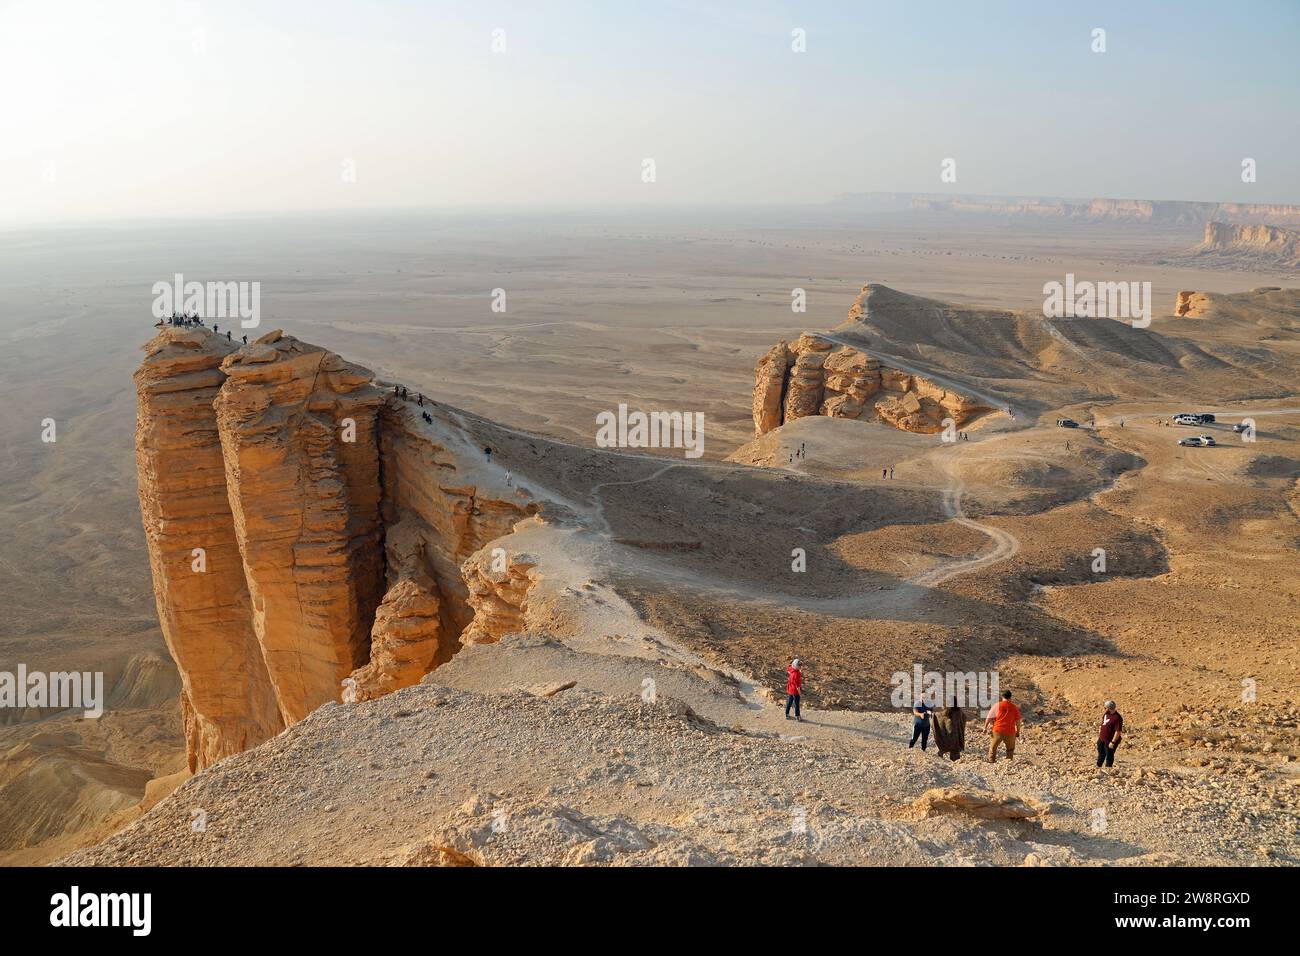 The amazing viewpoint at Jebel Fihrayn in Saudi Arabia Stock Photo